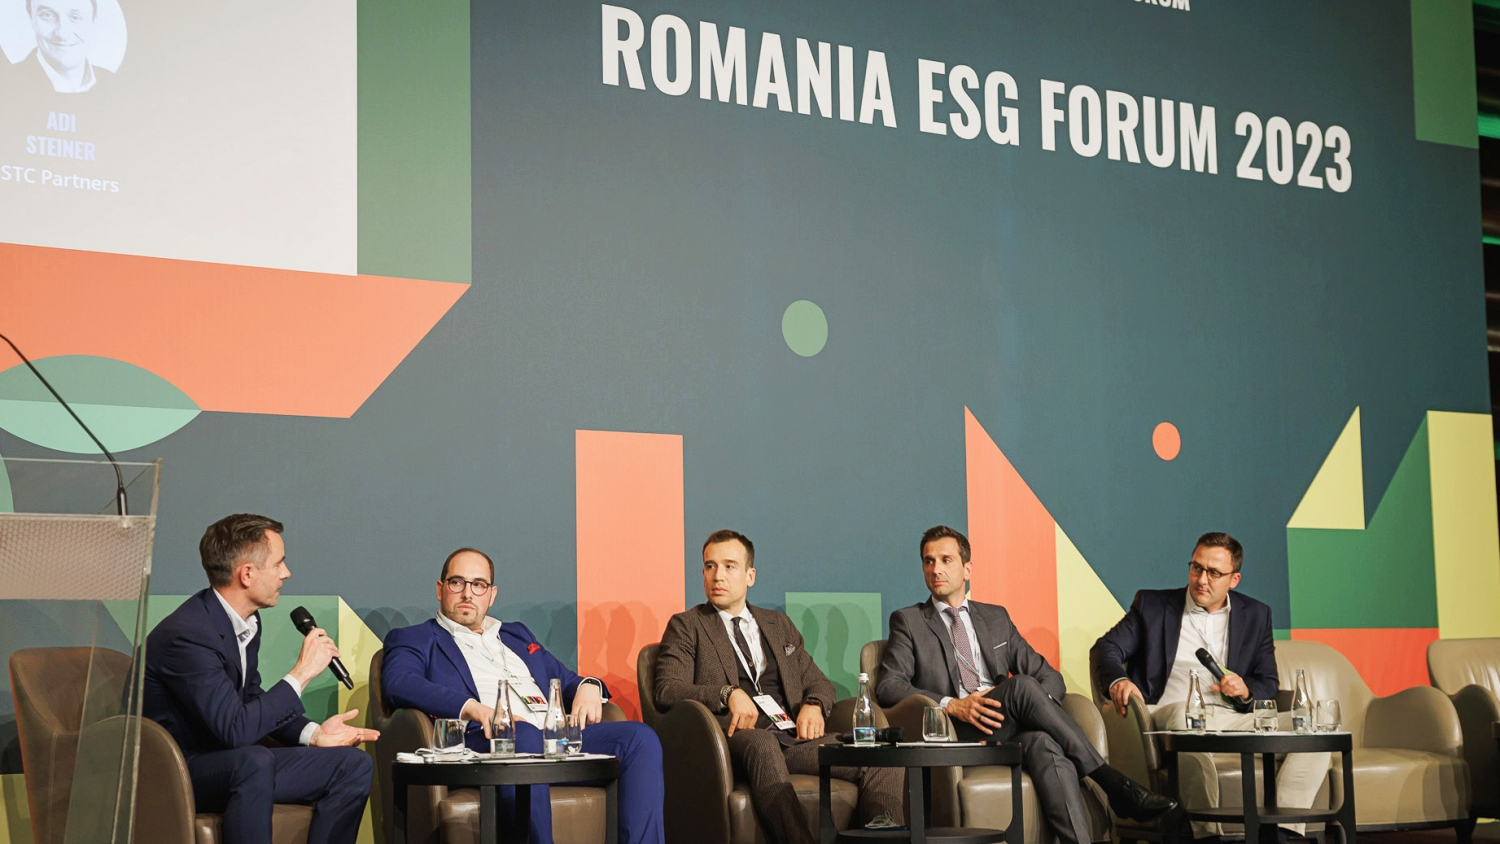 News Article Adi Steiner Alex Skouras Bogdan Doicescu Bucharest Cristian Ezri Romania Romania ESG Forum Tim Wilkinson